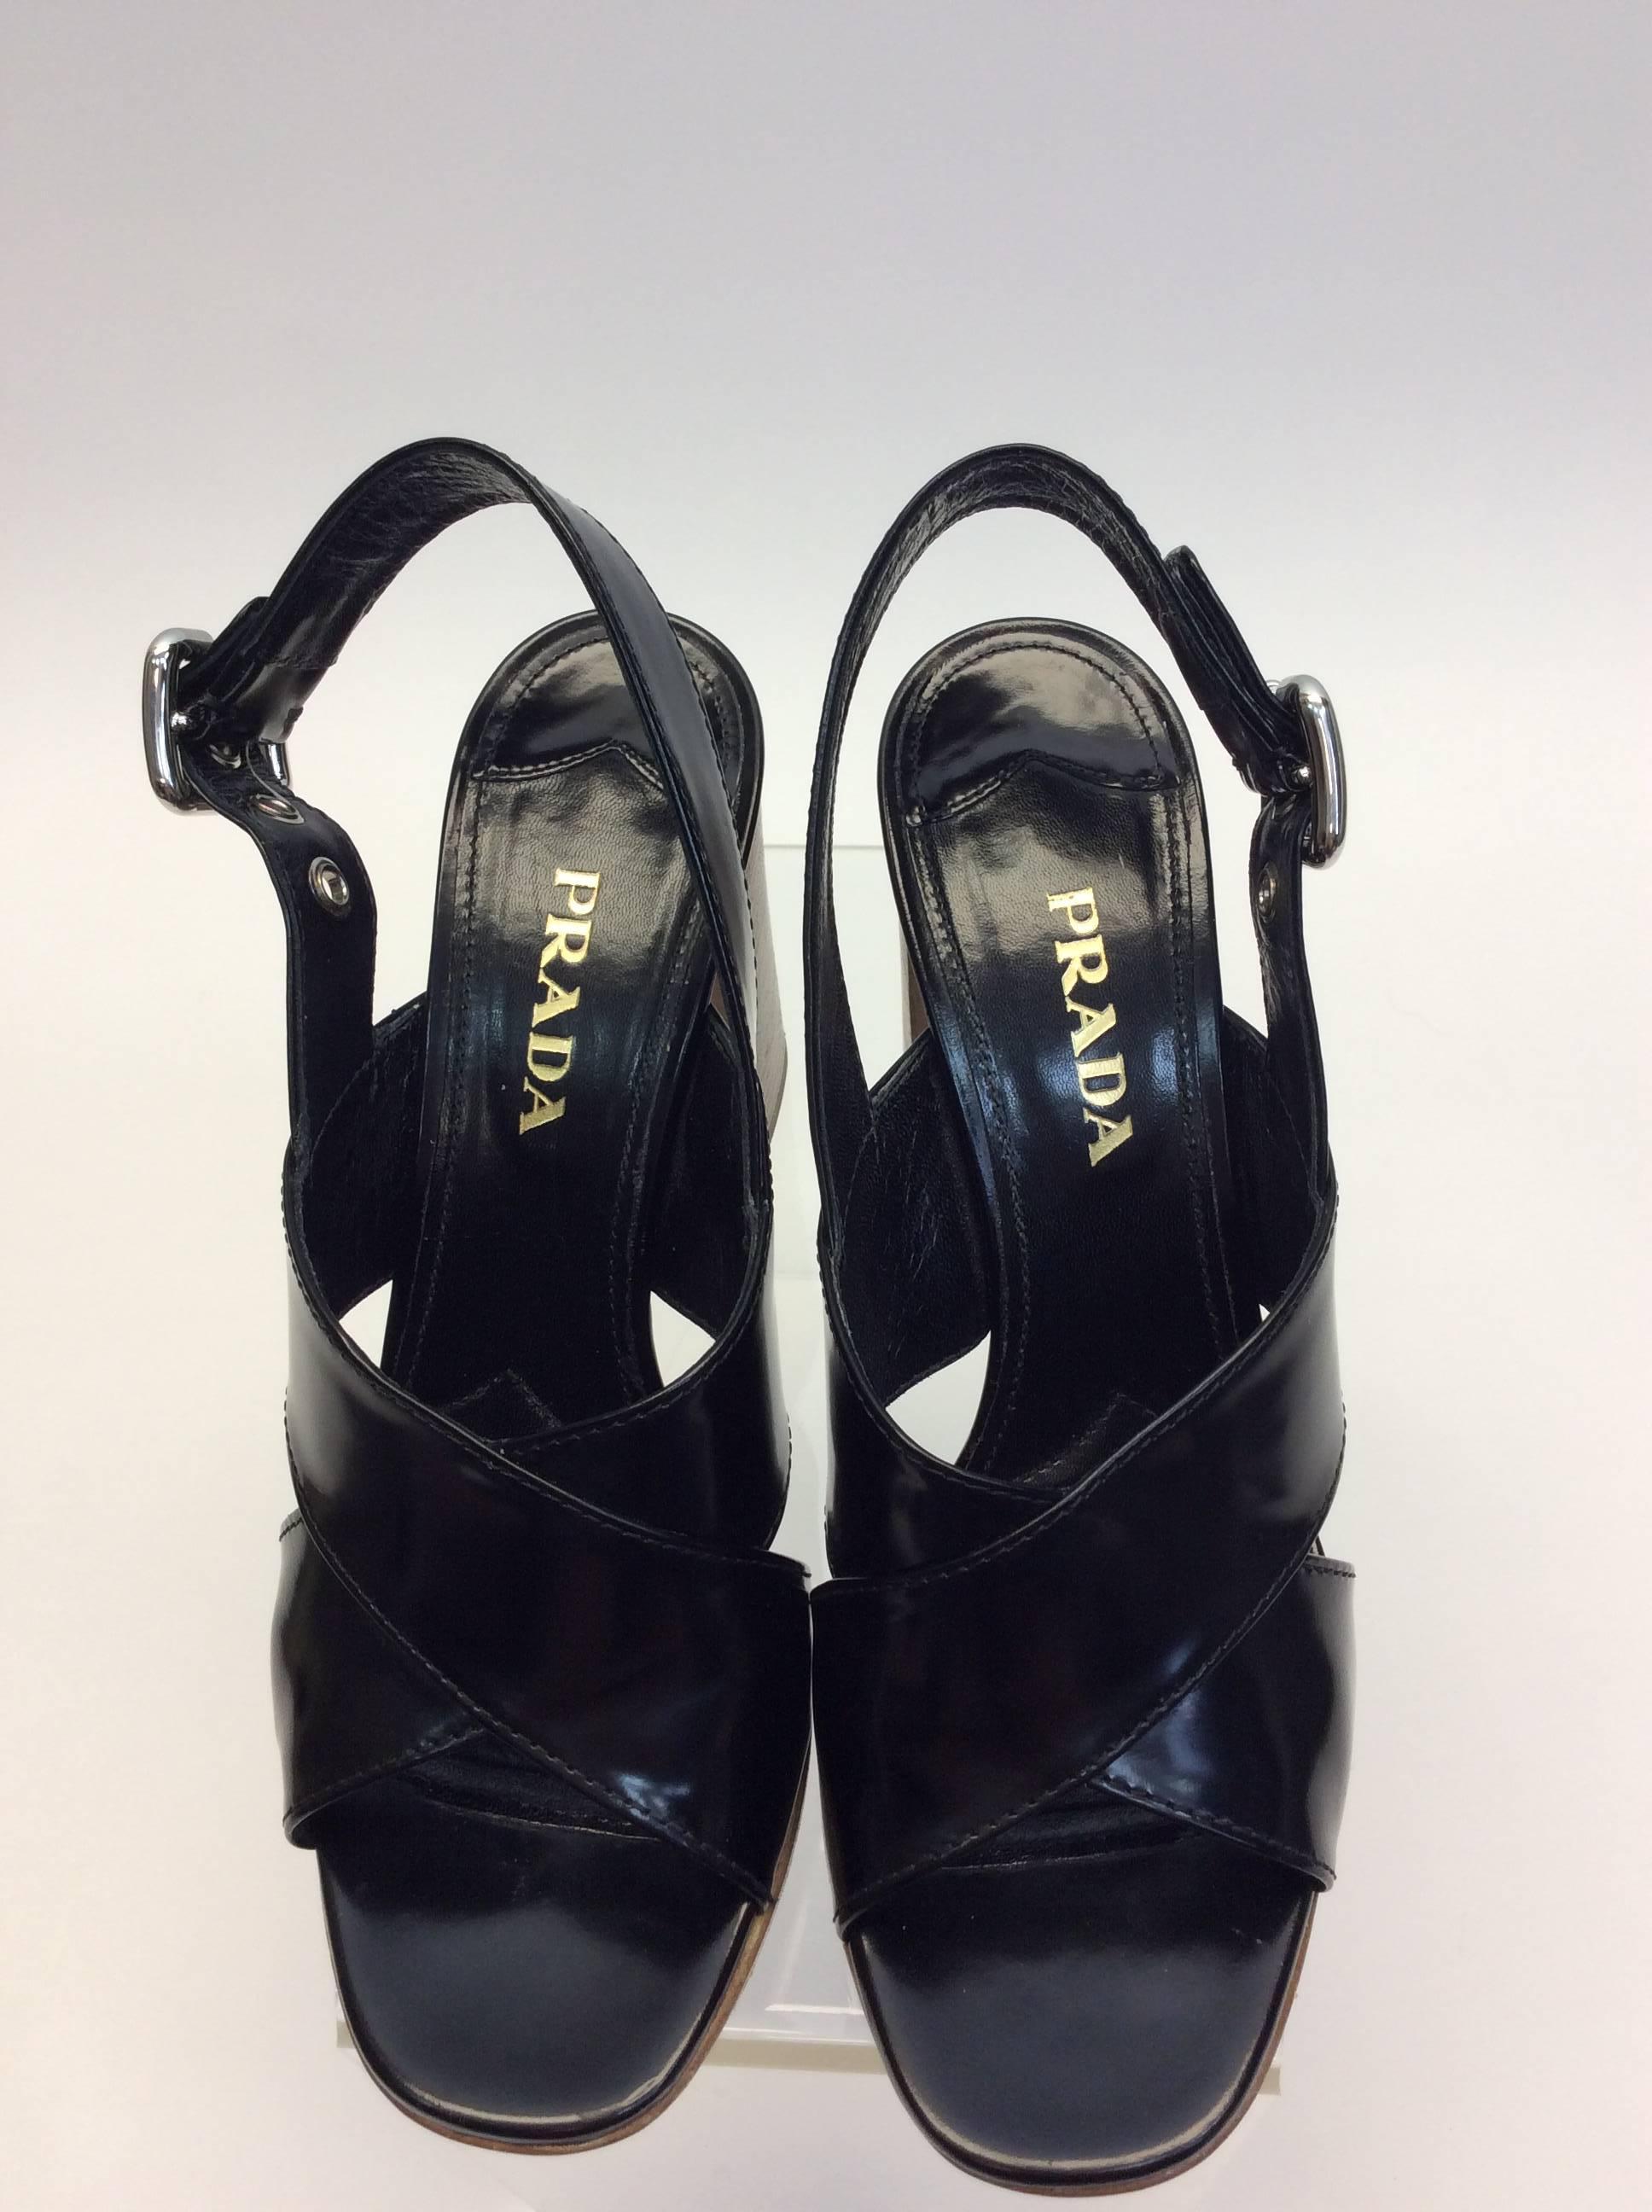 Prada Black Leather Heeled Sandal For Sale 2